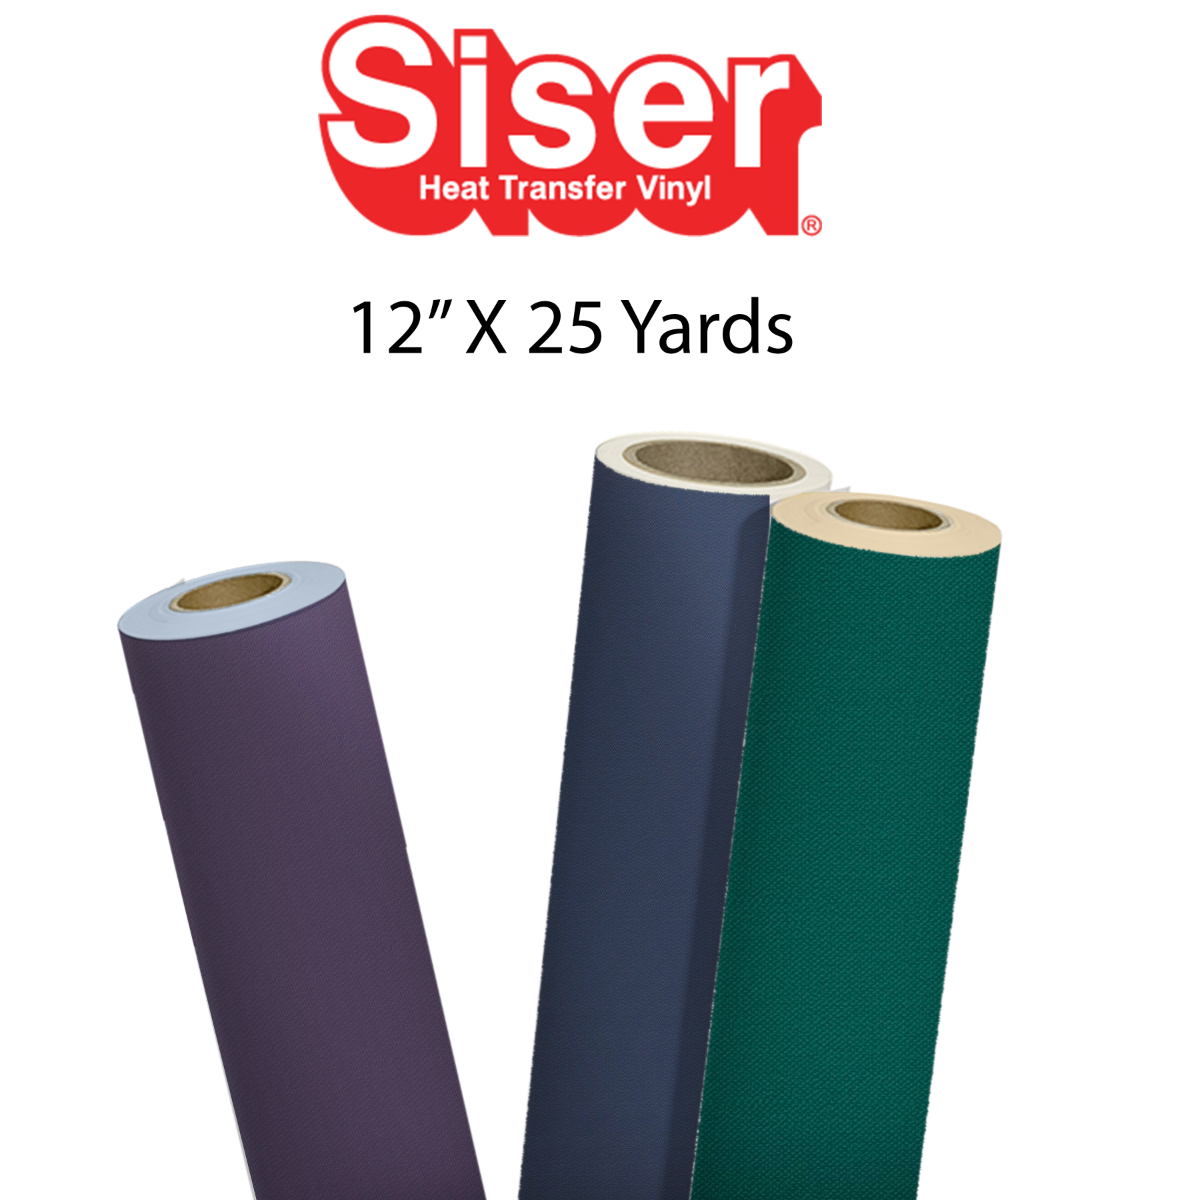 Siser Easy Puff Heat Transfer Vinyl - 12x25 Yards